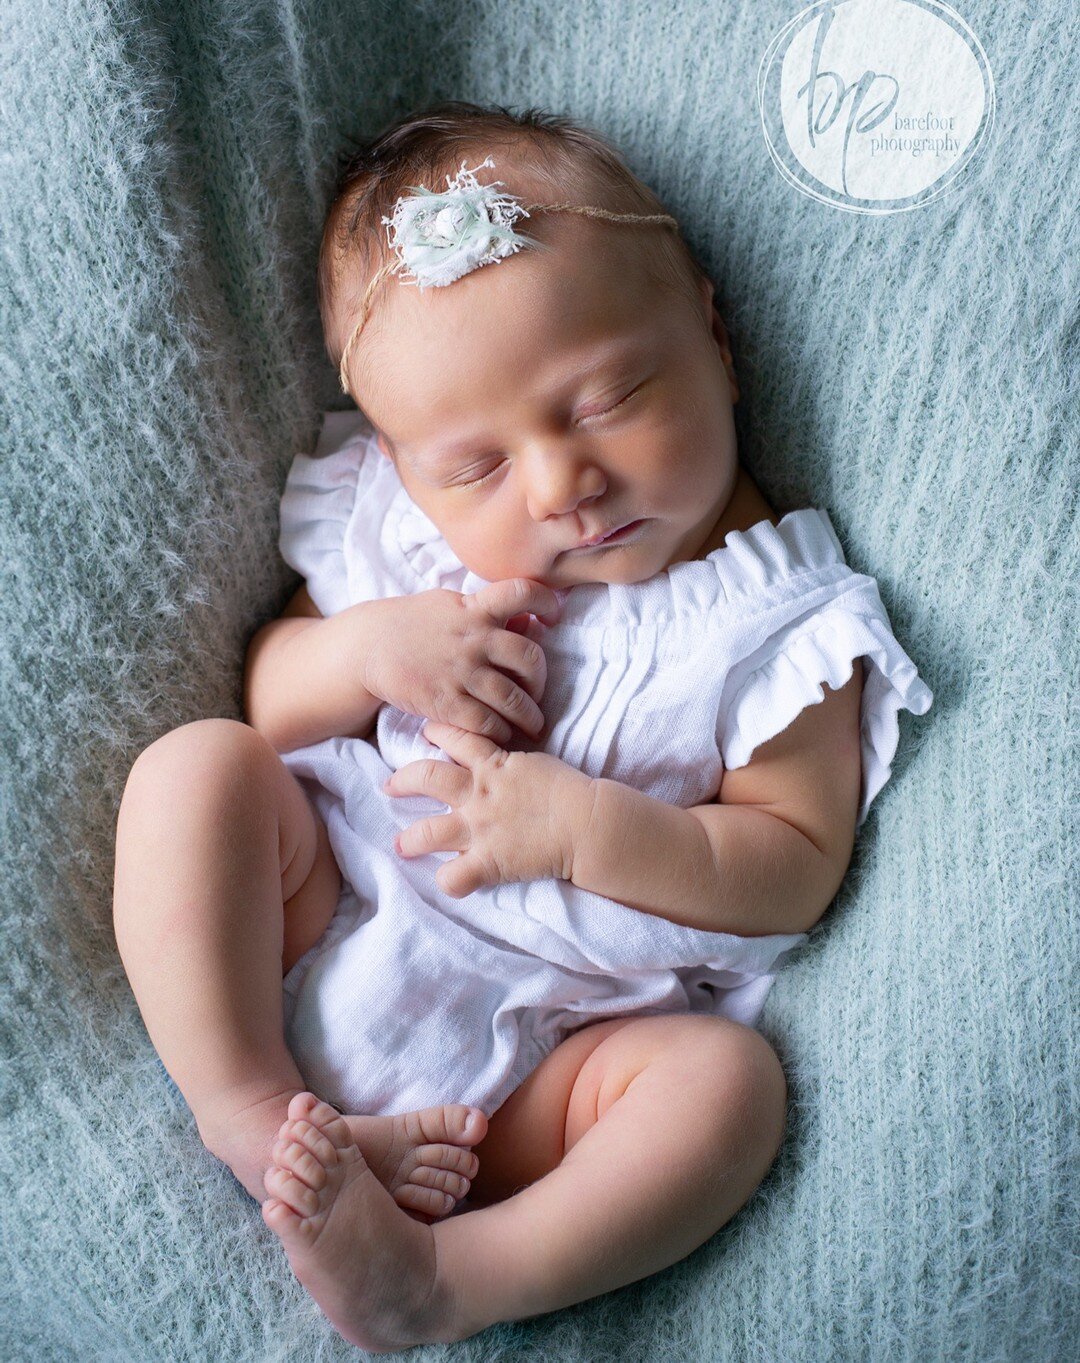 MYLAH 💕 a sleepy little poppet of love

#sutherlandshirenewbornphotographer&nbsp;#barefootphotography&nbsp;#kareenaprivatehospital&nbsp;#newbornhospitalphotography&nbsp;#newbornphotography